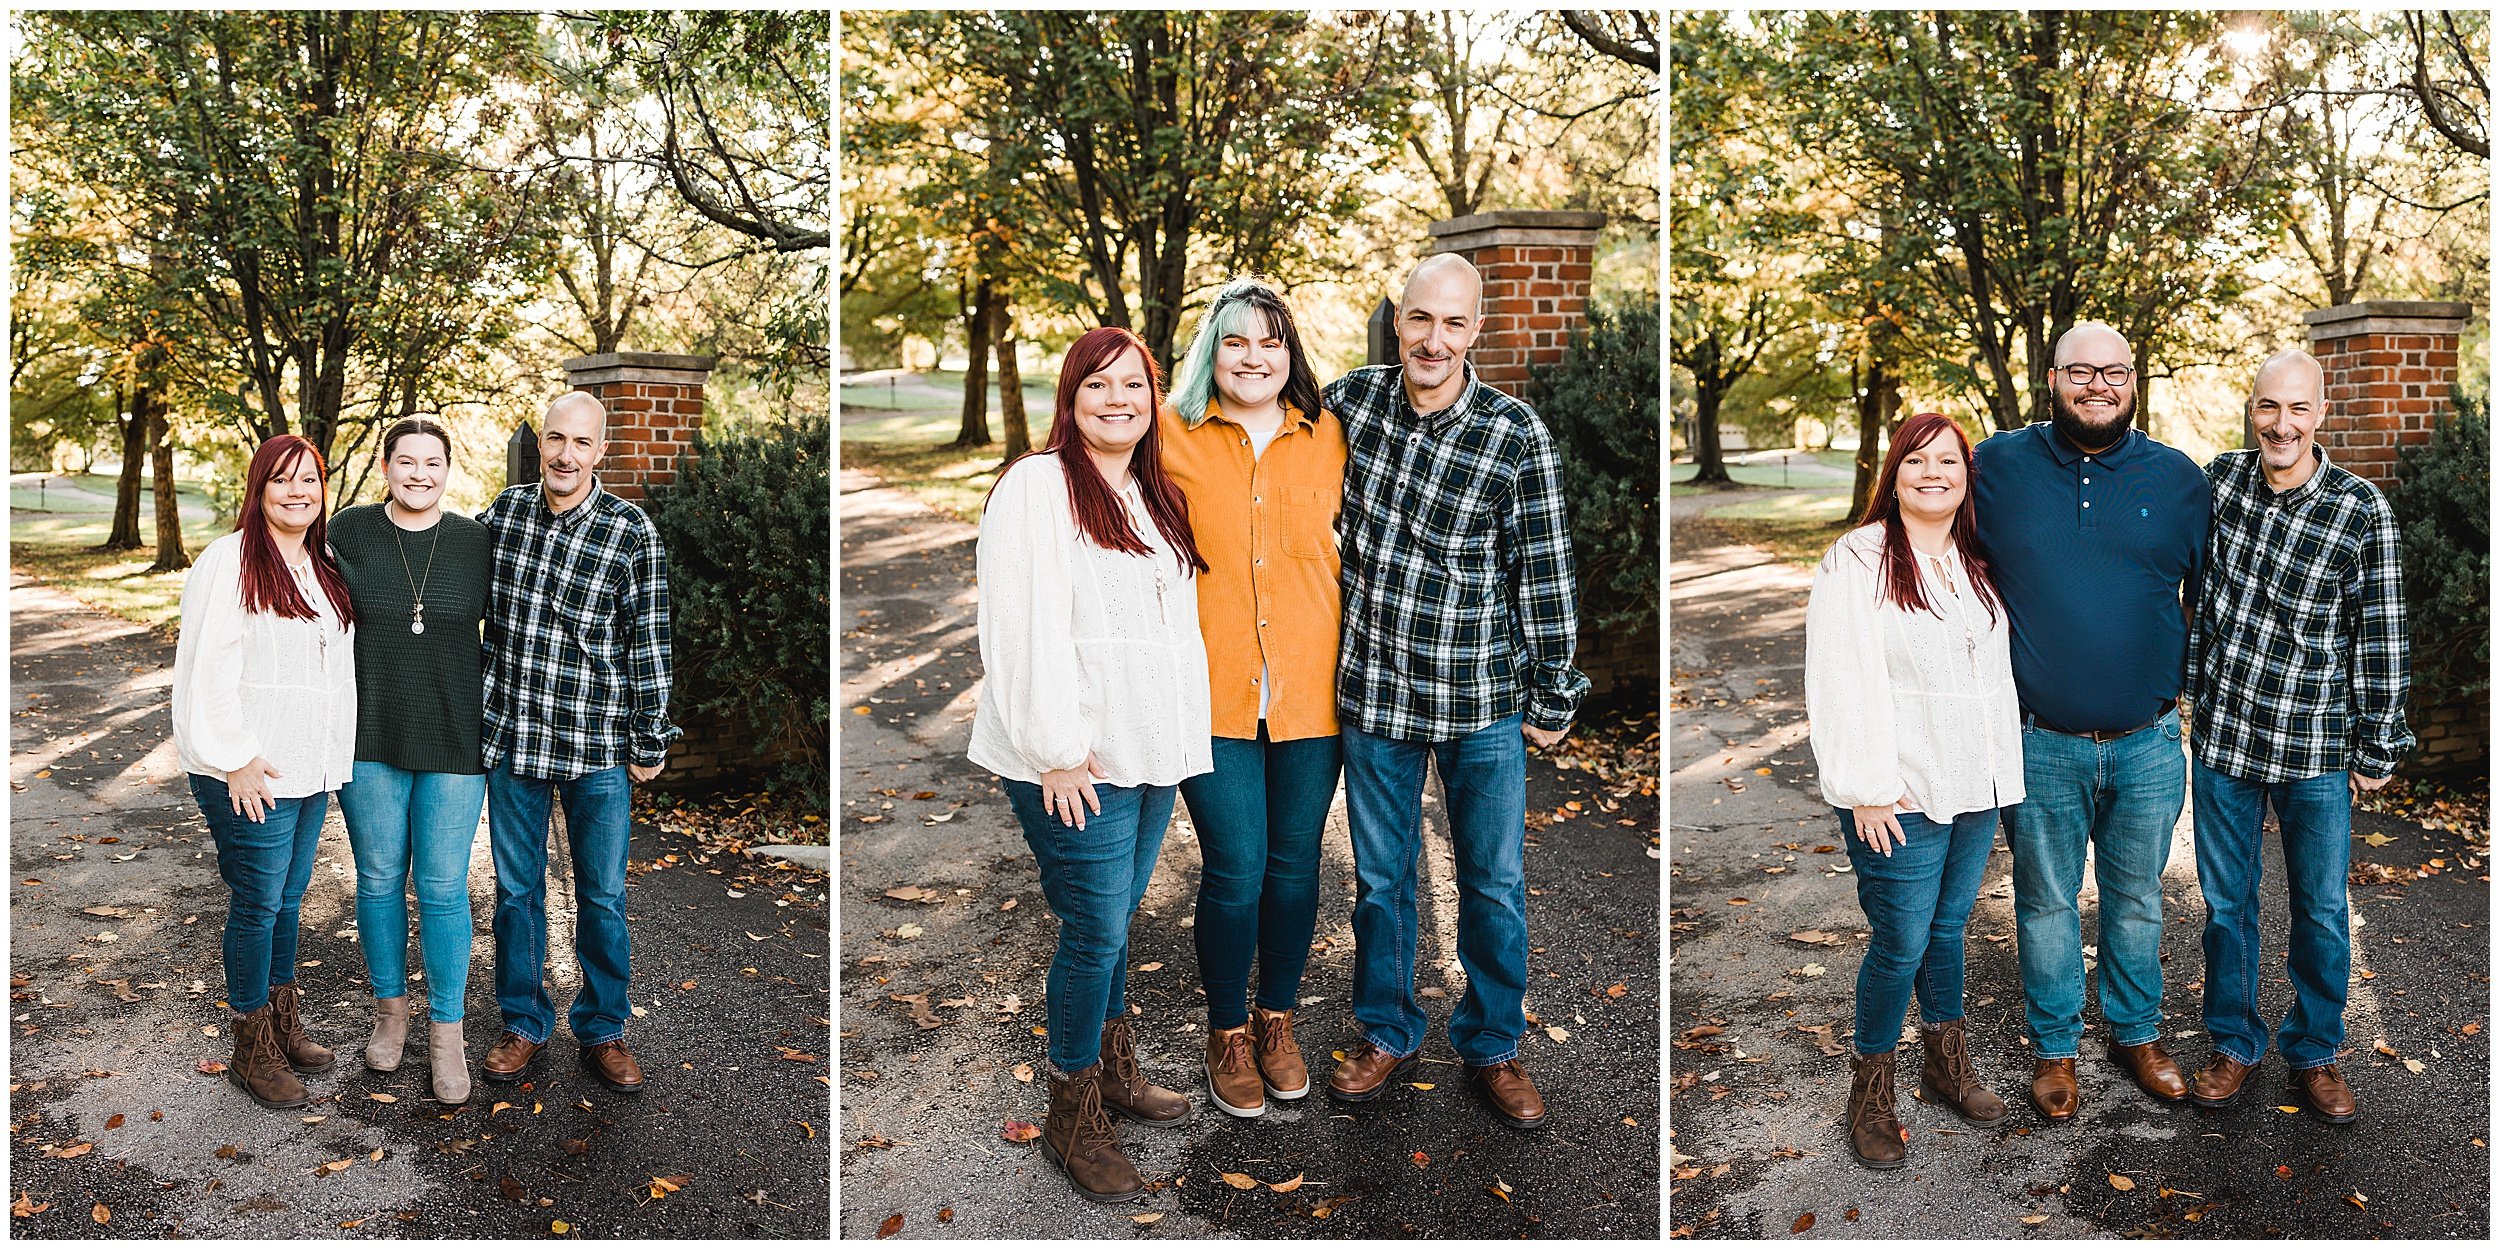 Extended Family Photography | Carmel Indiana 